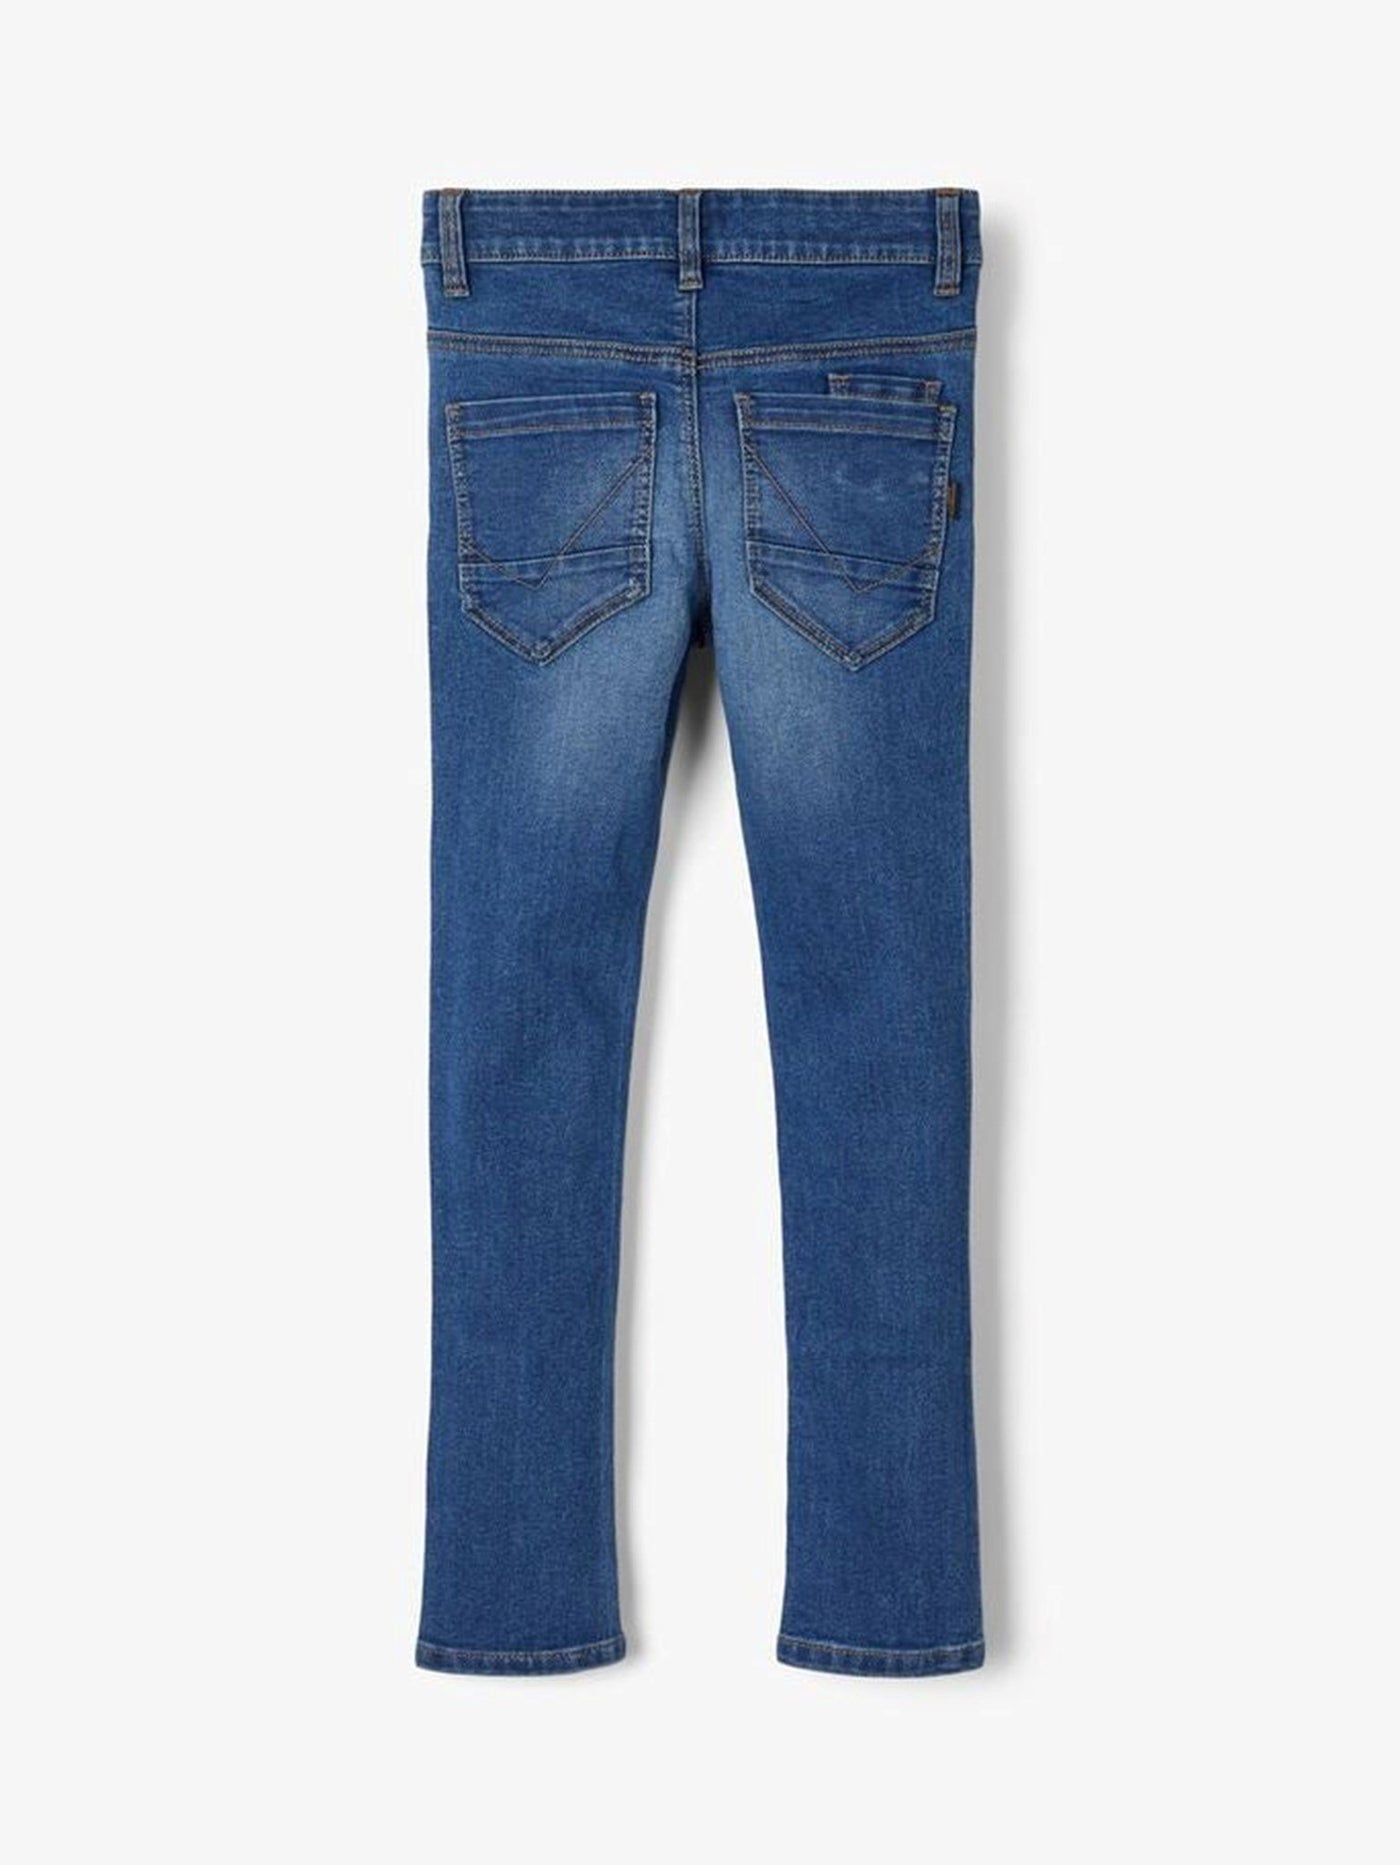 X-slim fit Jeans - Medium Blue Denim - Name It - Blå 2